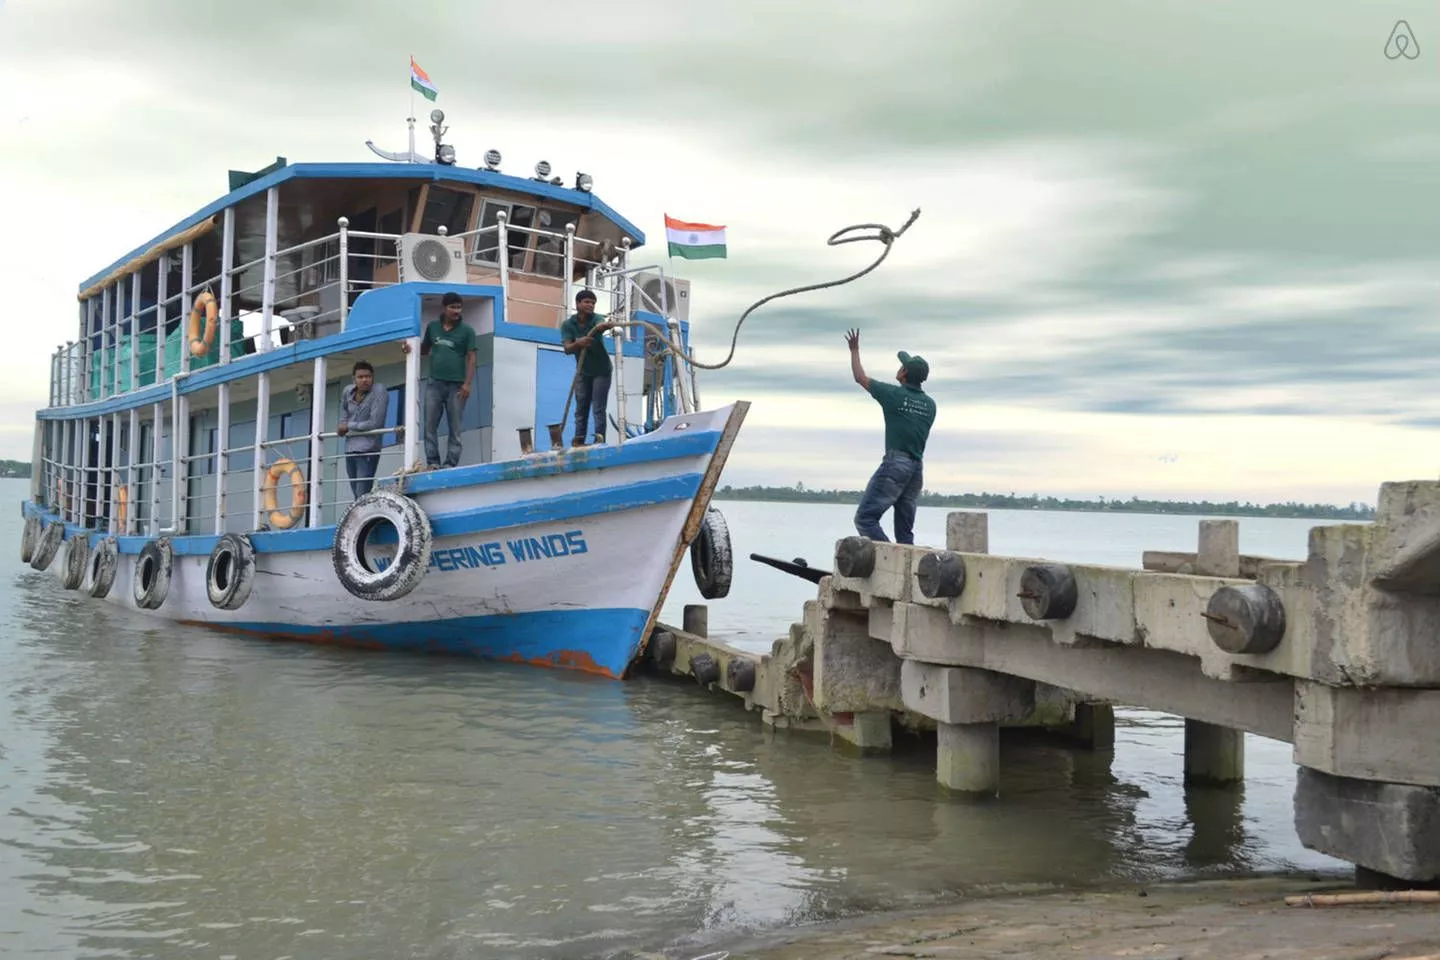 Sundarban Boat